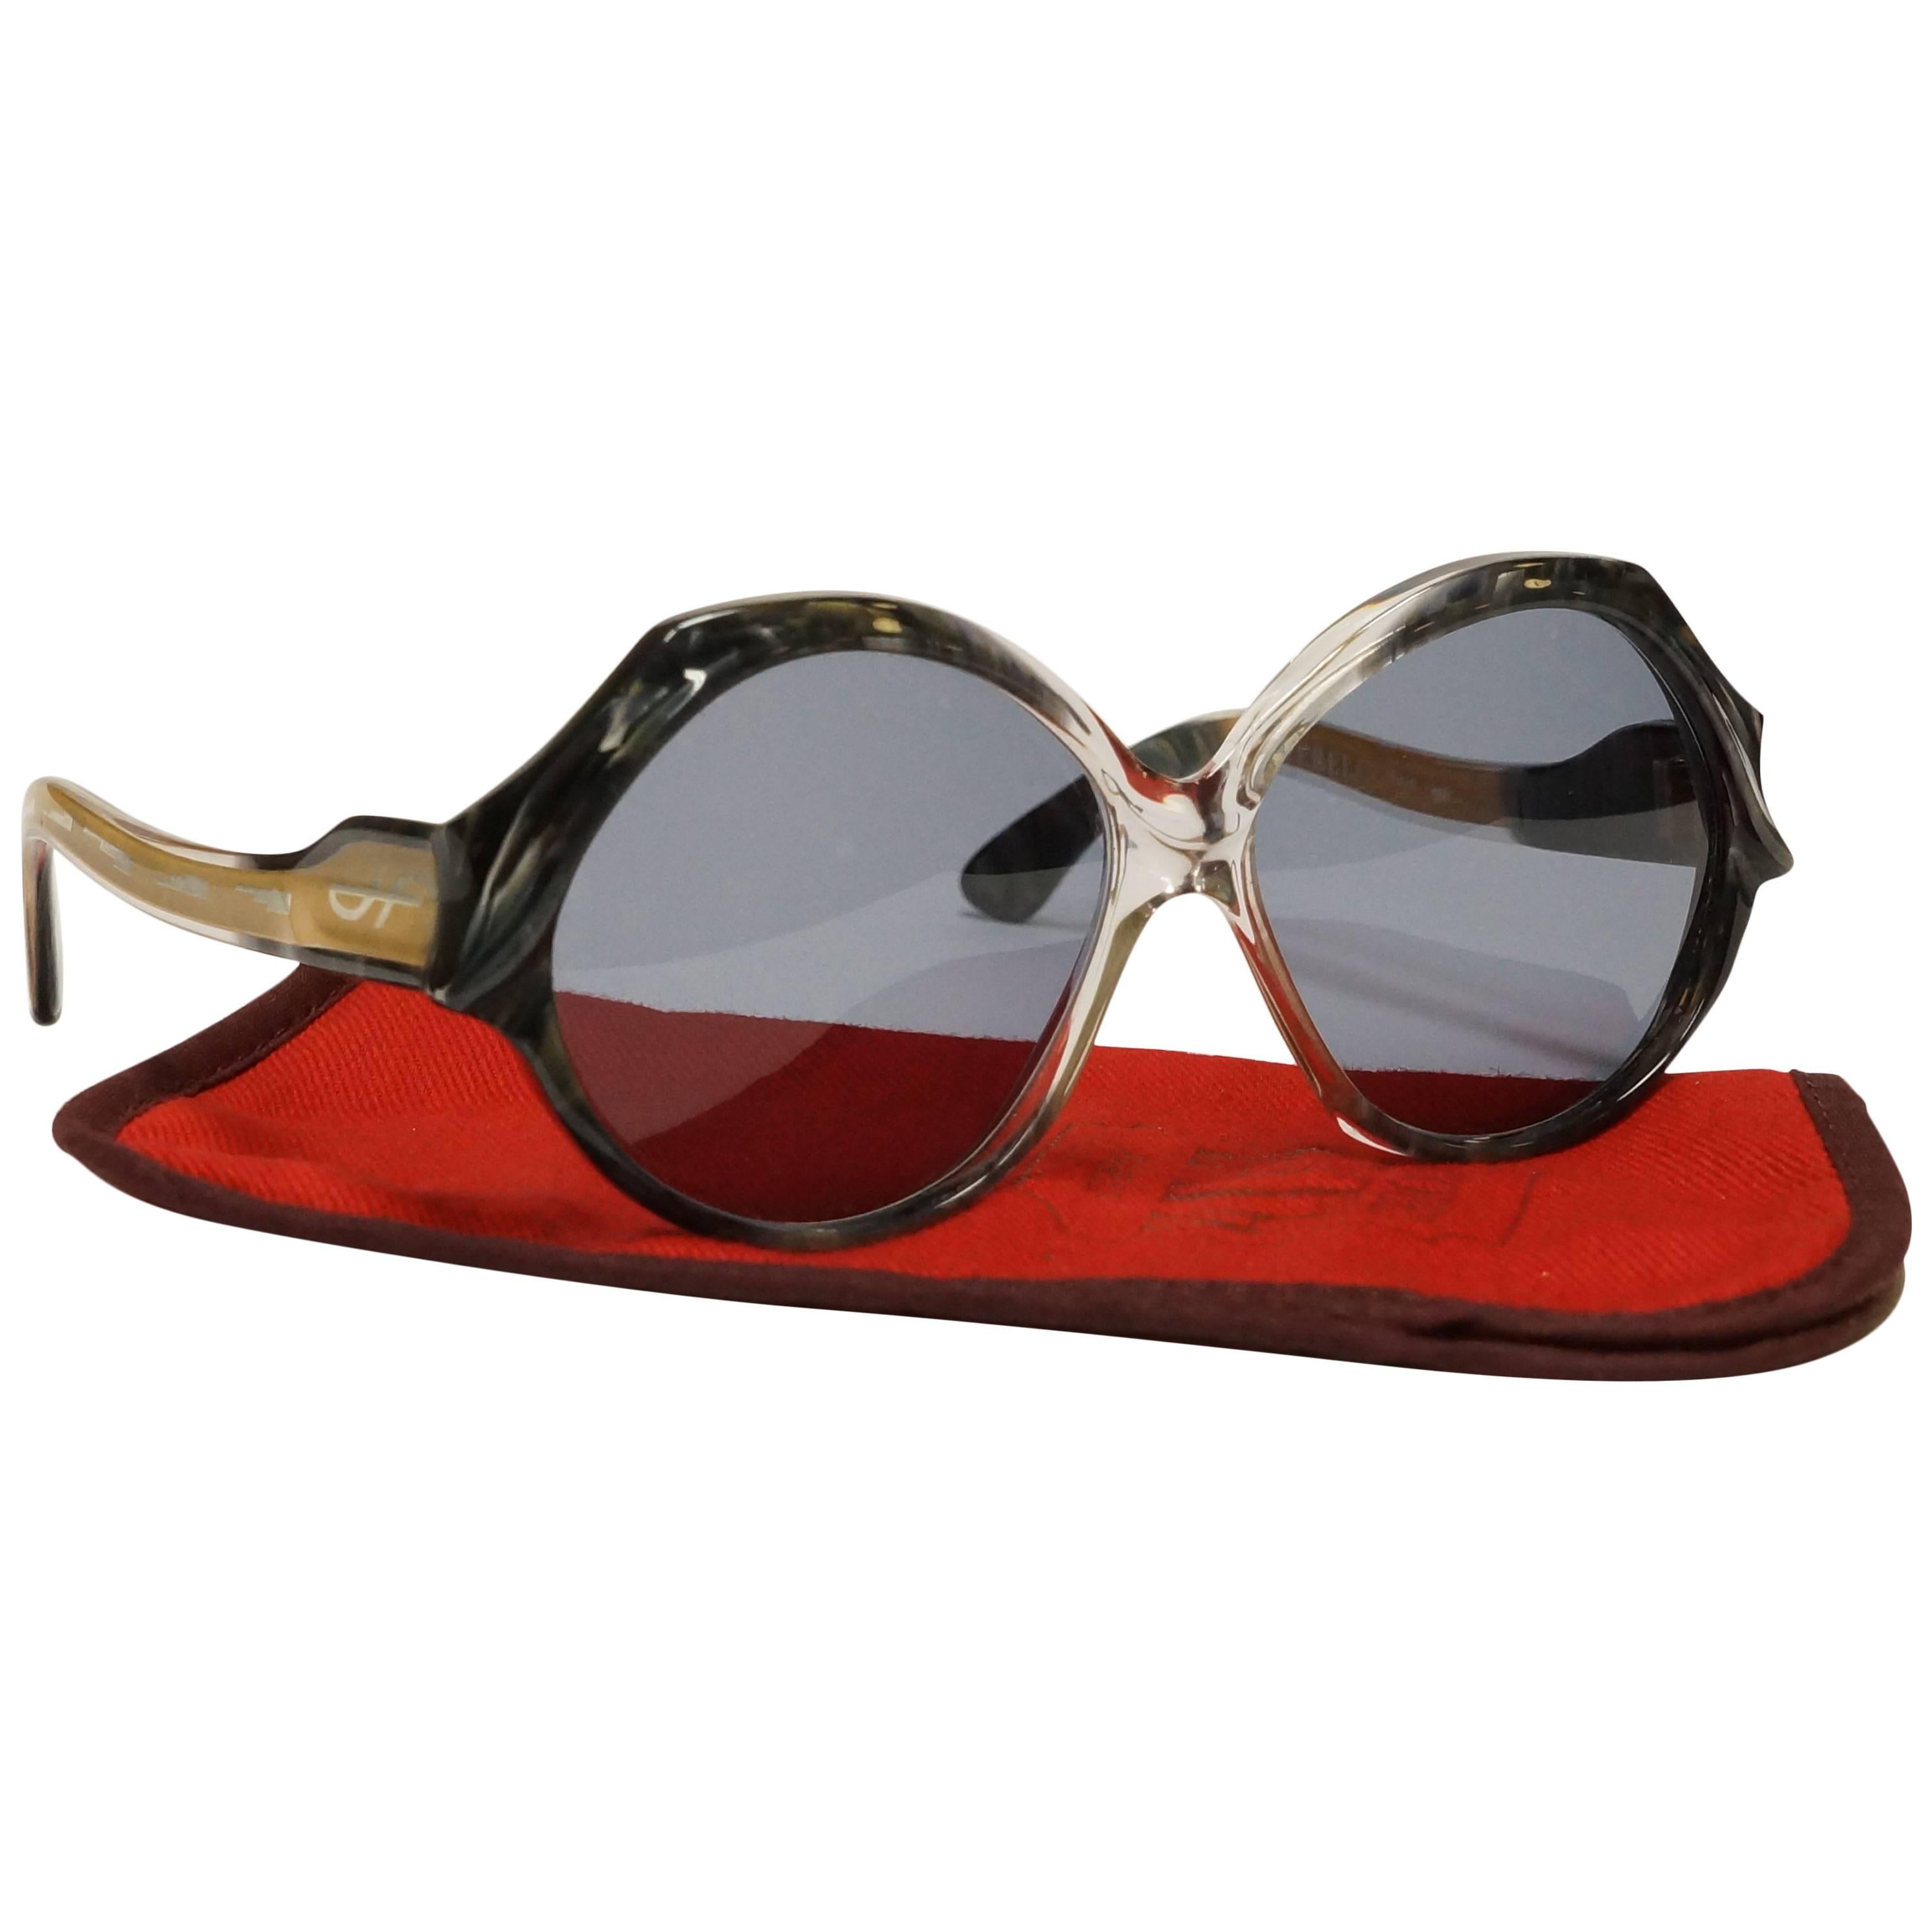 70s French Vintage Sunglasses by Jacques Fath - model Esterel/7  For Sale